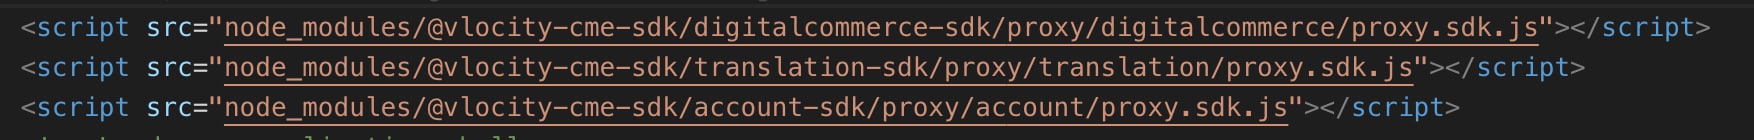 Script tag, Proxy SDK index.html​​ file